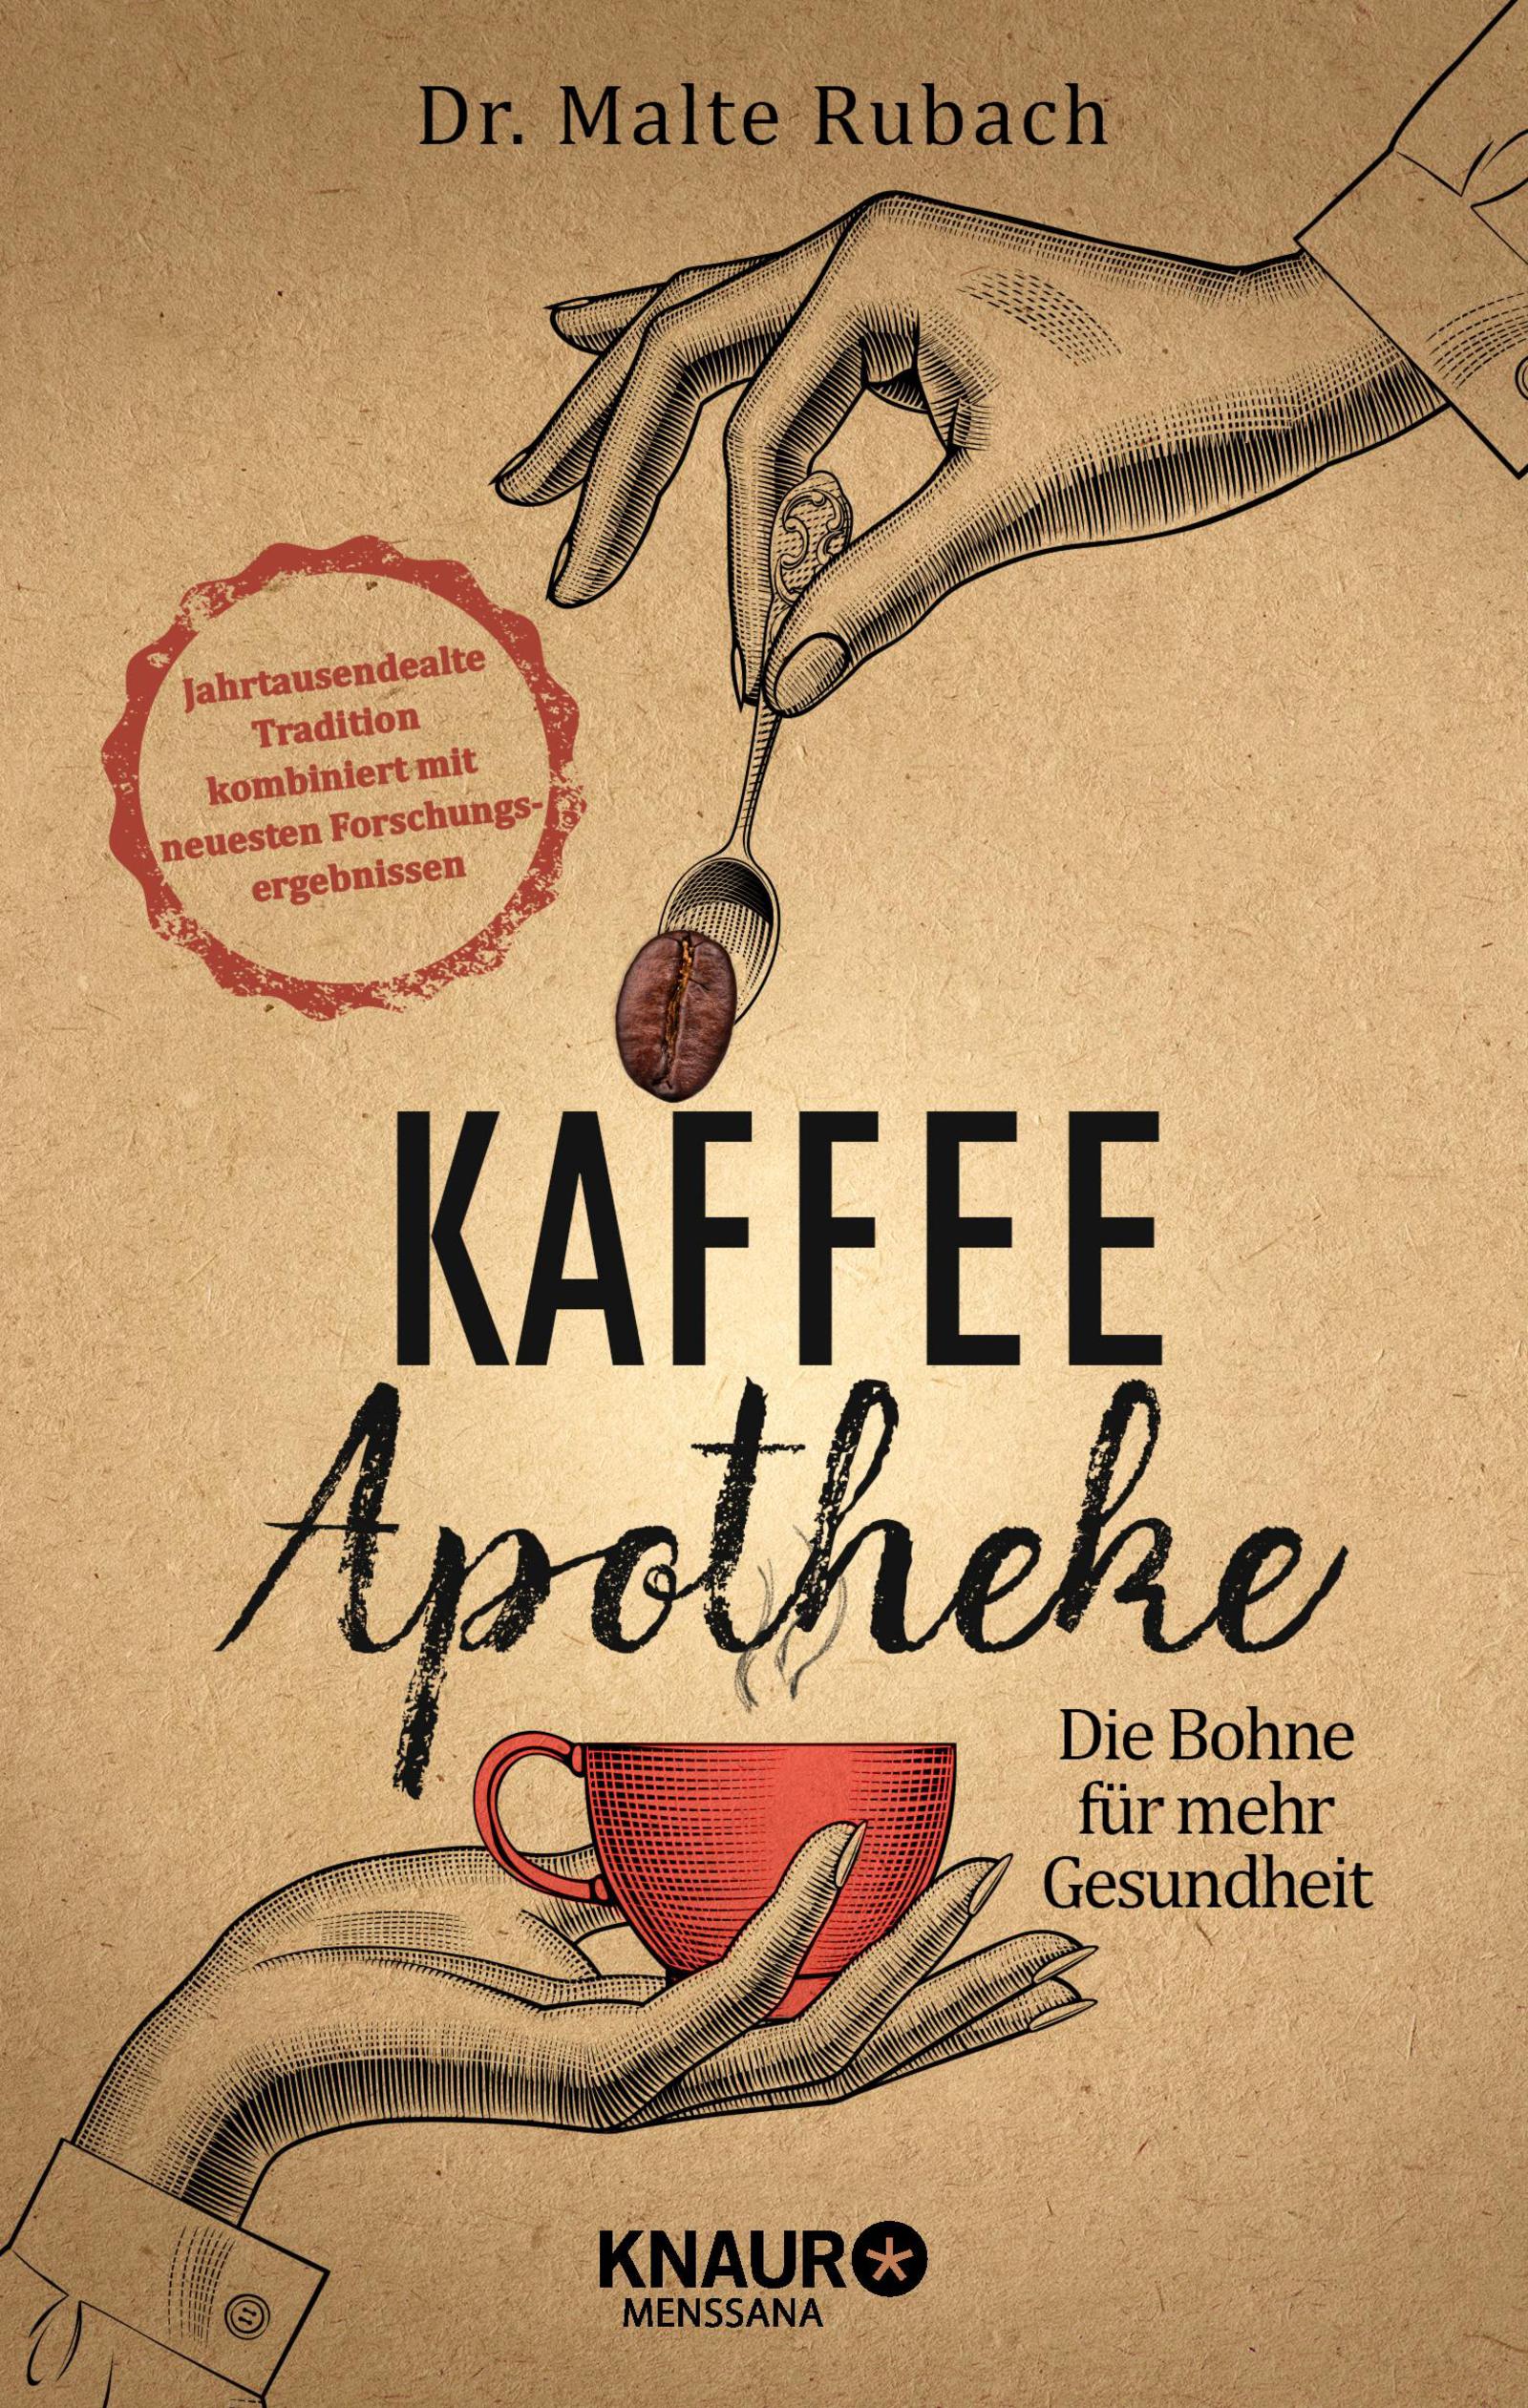 Buch: Kaffee Apotheke - Dr Malte Rubach - Gewicht: ca. 0,3 kg